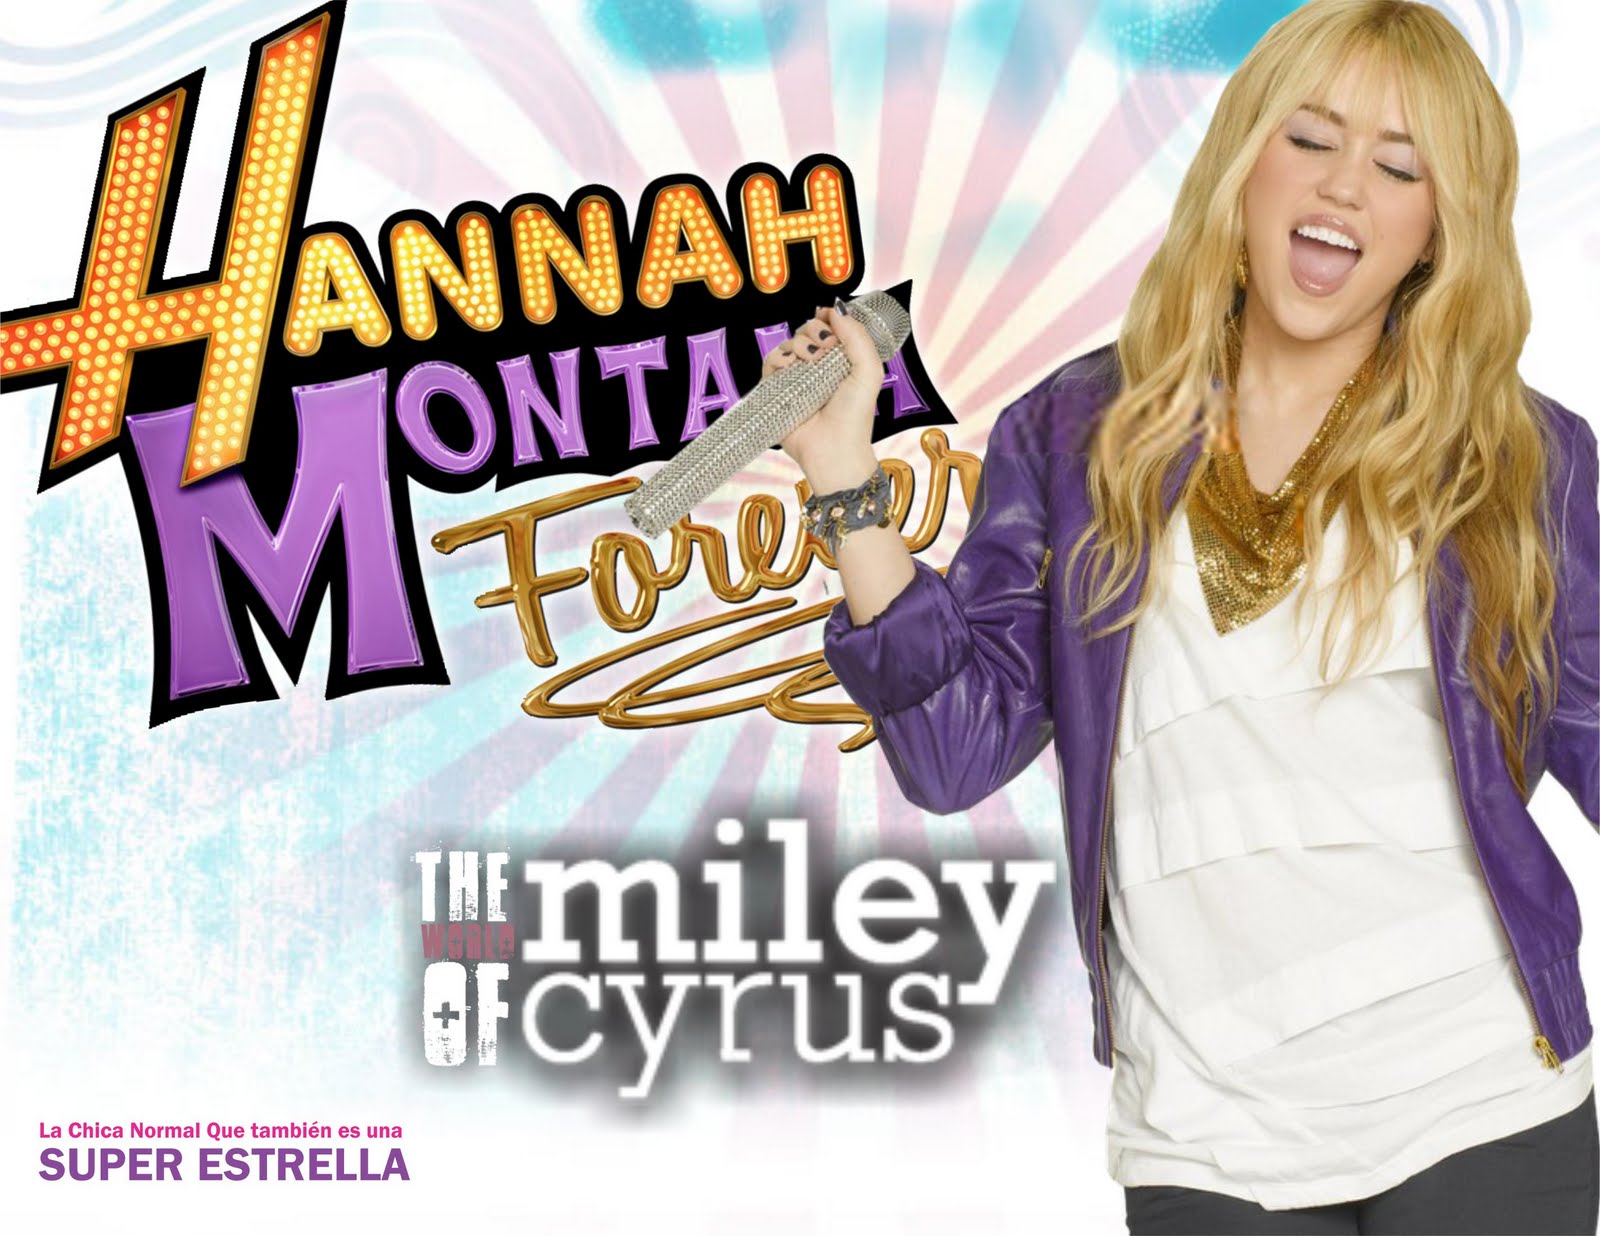 Hacker S Fondos Hannah Montana Forever